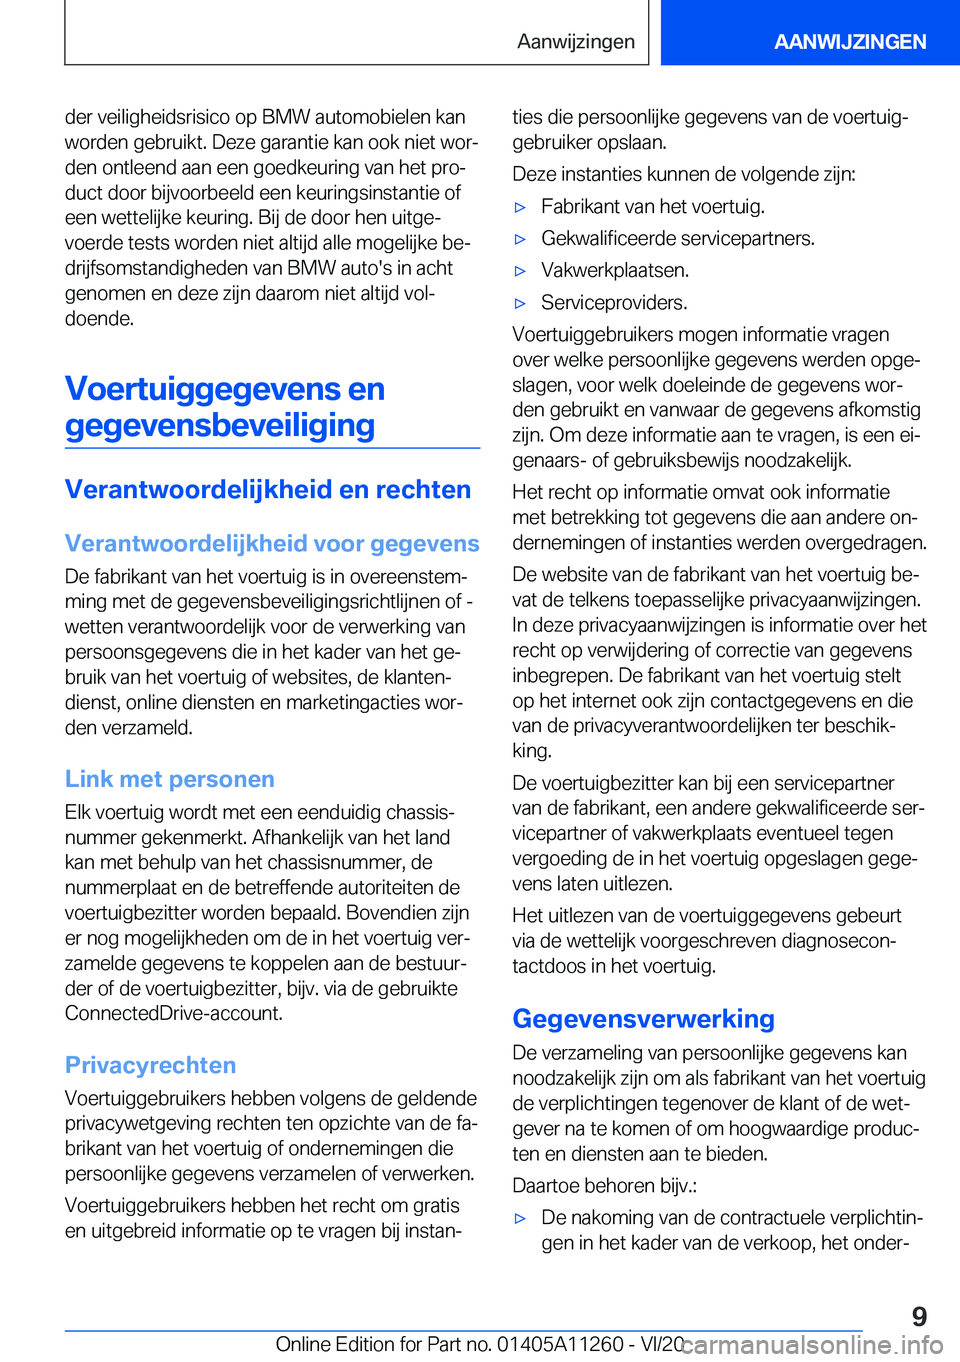 BMW 4 SERIES COUPE 2021  Instructieboekjes (in Dutch) �d�e�r��v�e�i�l�i�g�h�e�i�d�s�r�i�s�i�c�o��o�p��B�M�W��a�u�t�o�m�o�b�i�e�l�e�n��k�a�n
�w�o�r�d�e�n��g�e�b�r�u�i�k�t�.��D�e�z�e��g�a�r�a�n�t�i�e��k�a�n��o�o�k��n�i�e�t��w�o�rj
�d�e�n��o�n